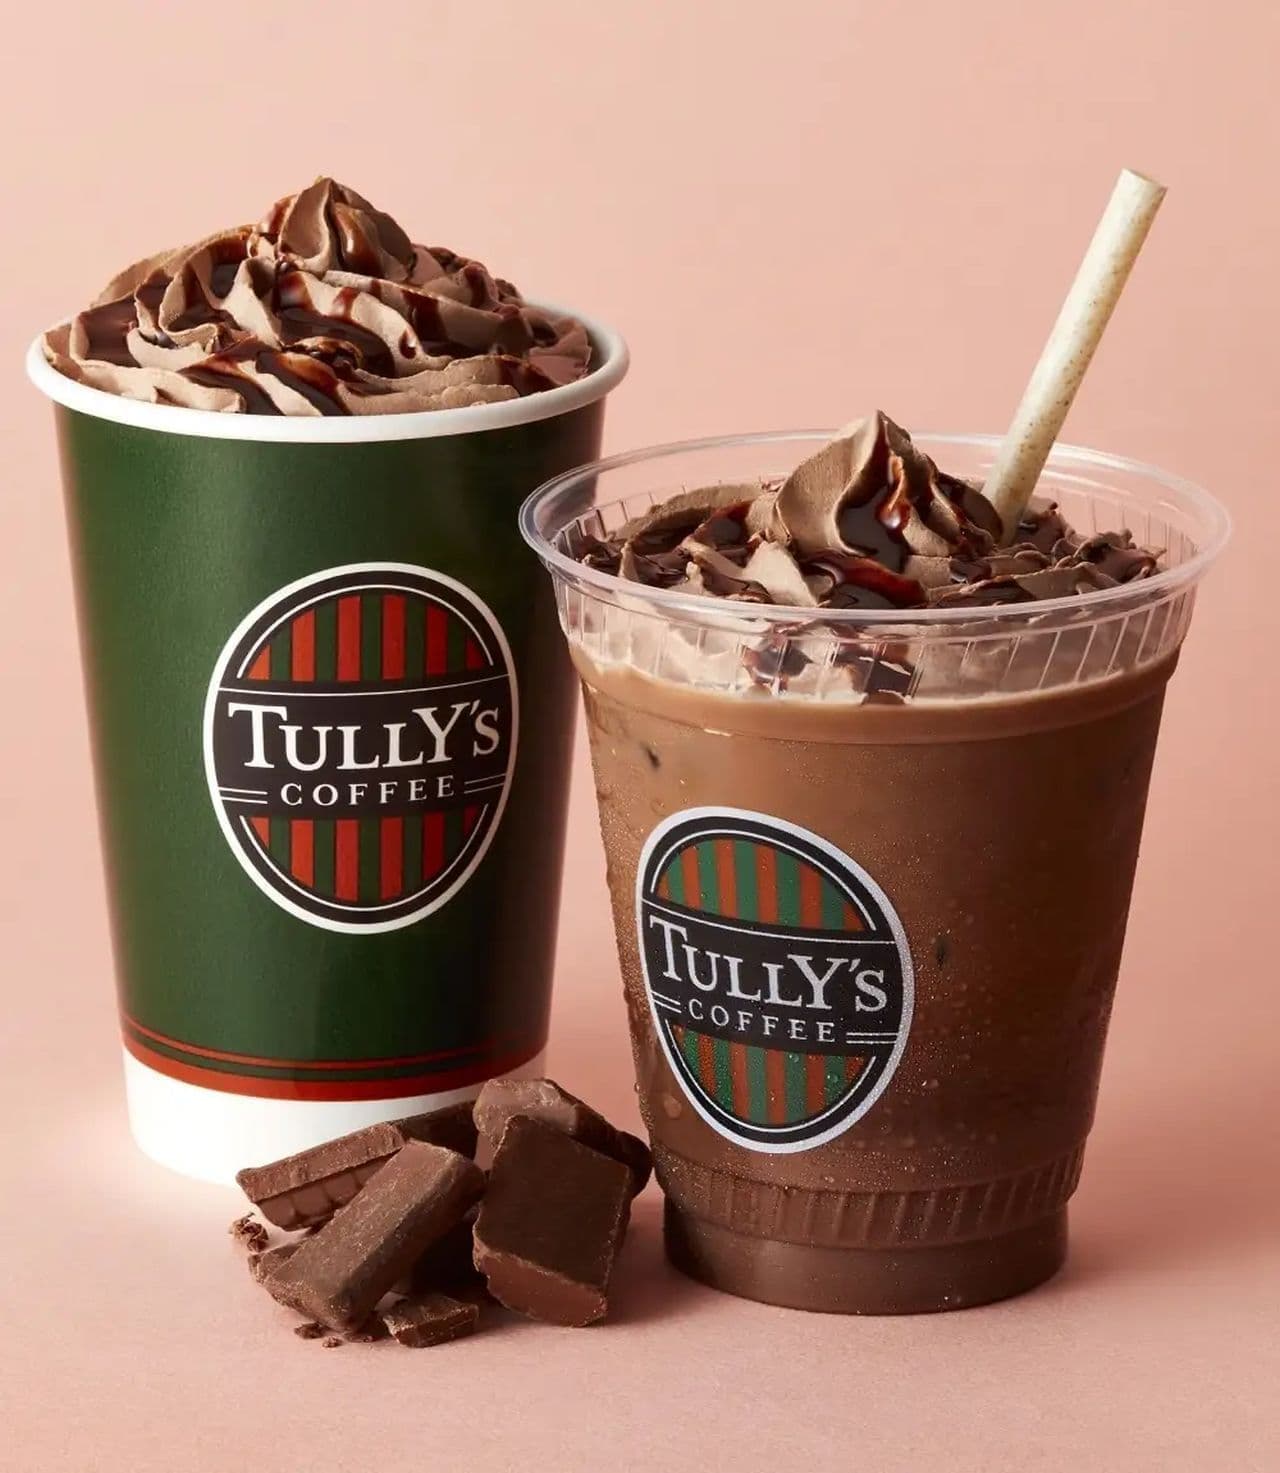 Tully's Coffee "Chocolate Lovers Mocha - Dark Temptation 73% Cacao